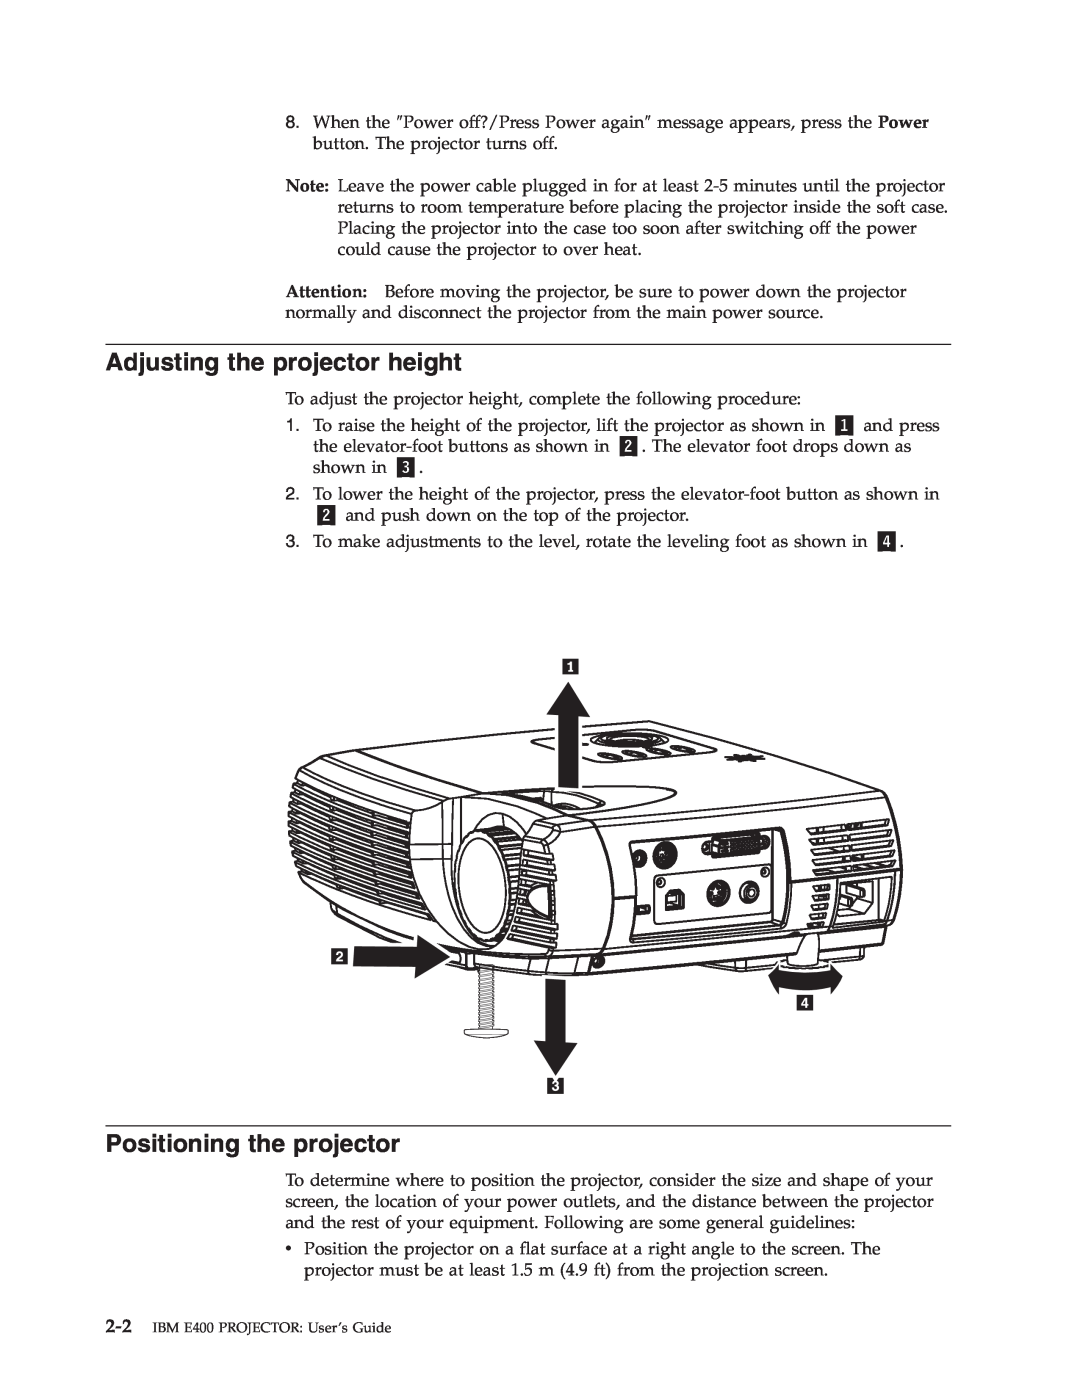 IBM Partner Pavilion PROJECTOR E400 manual Adjusting the projector height, Positioning the projector 